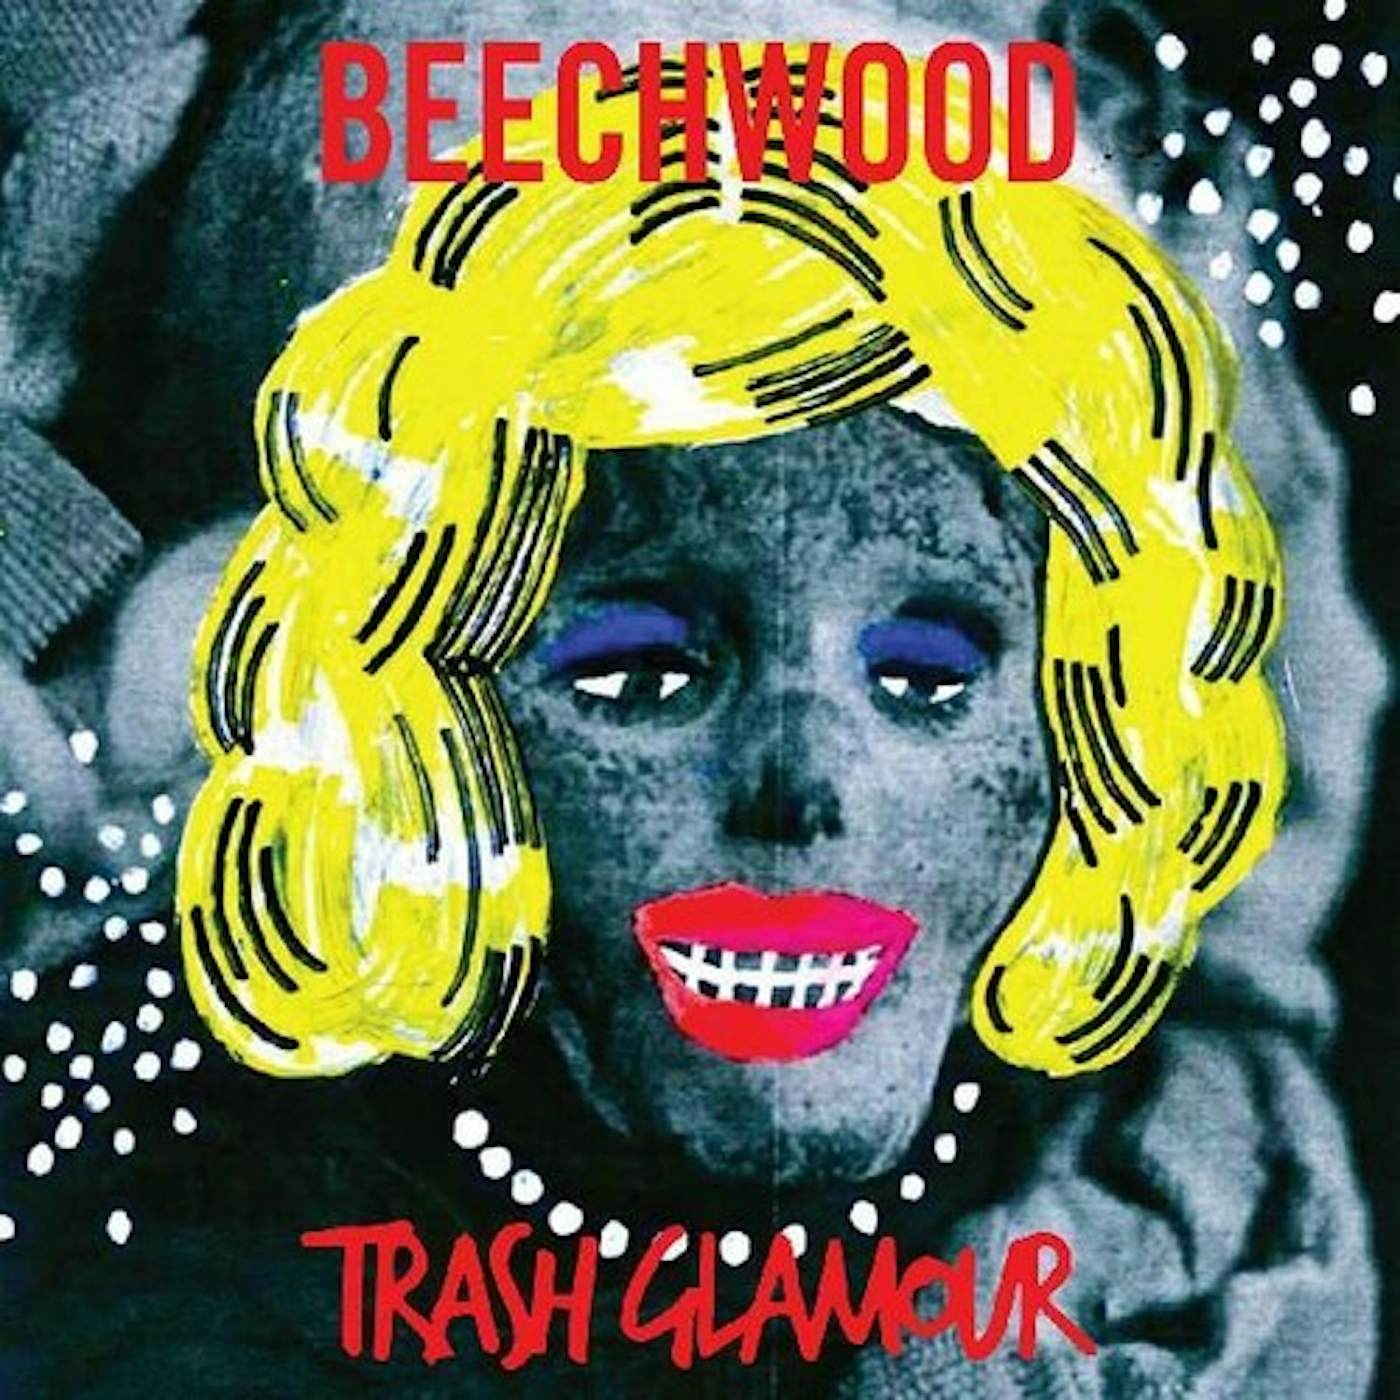 Beechwood Trash Glamour Vinyl Record